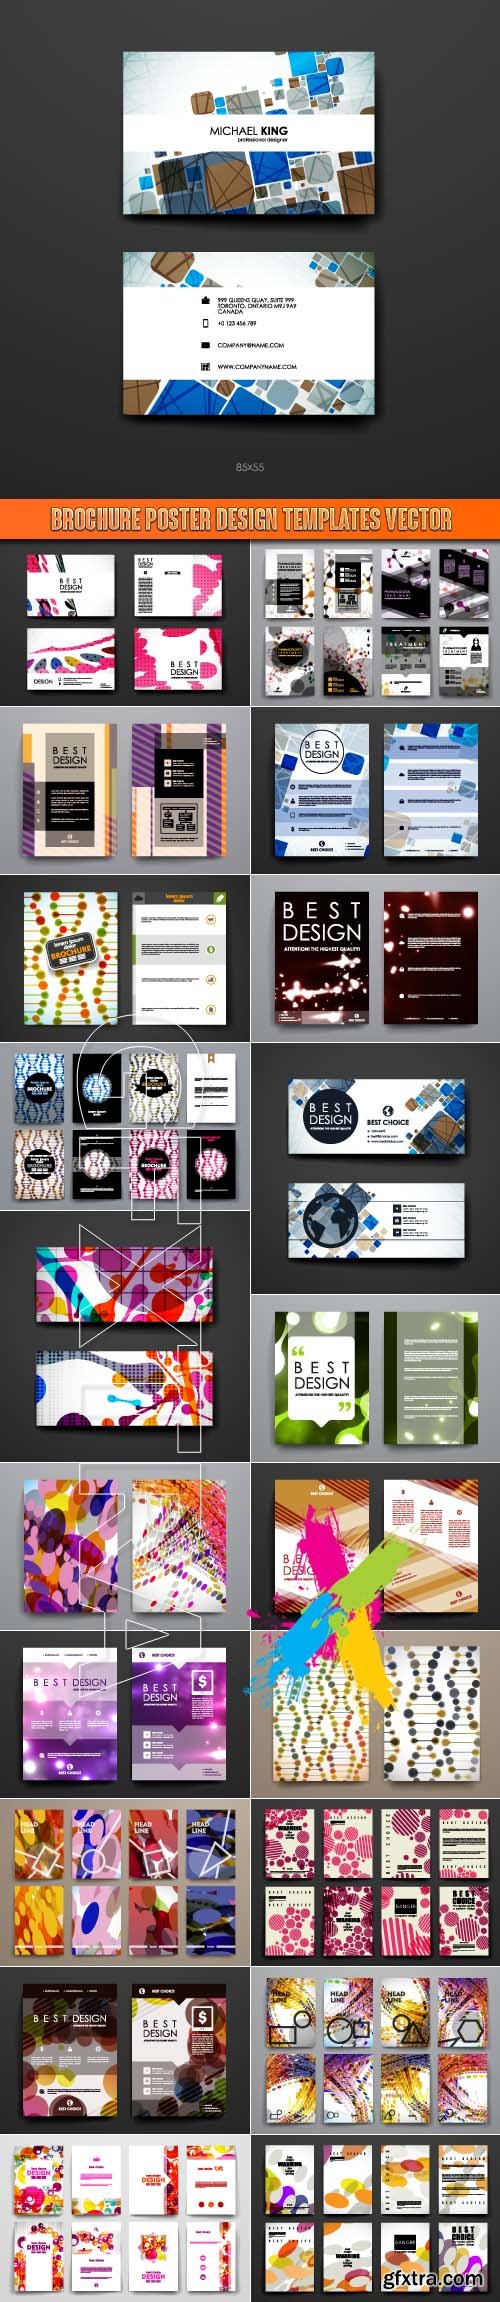 Brochure poster design templates vector